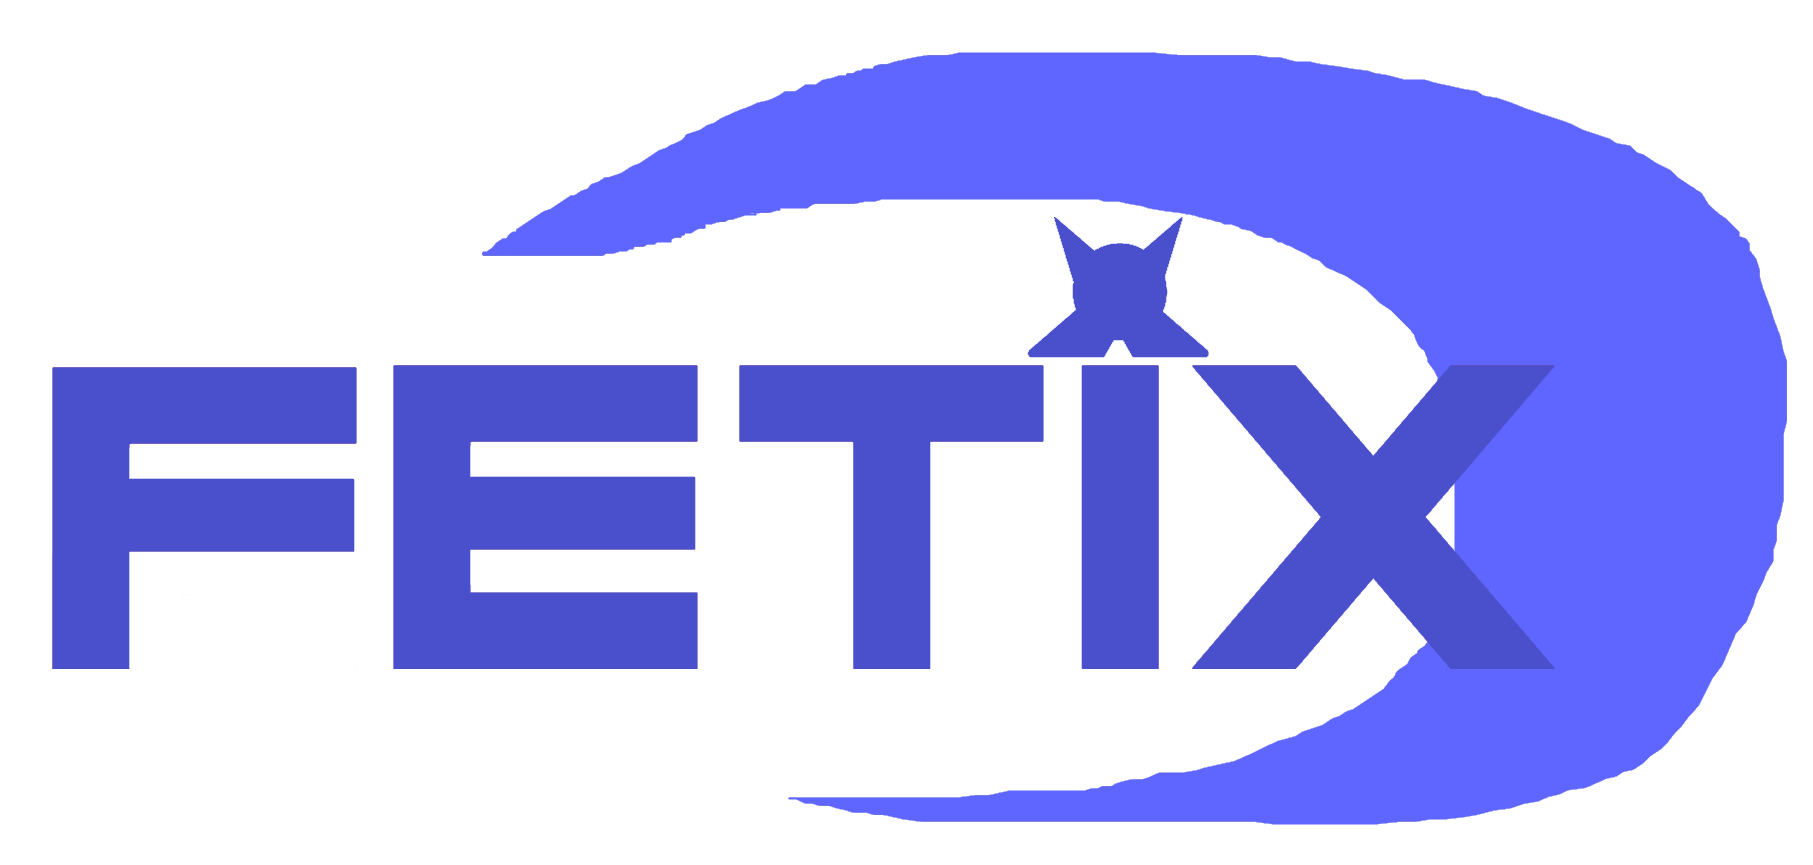 Fetix Rebranding 23 January 2021 Blank Meme Template